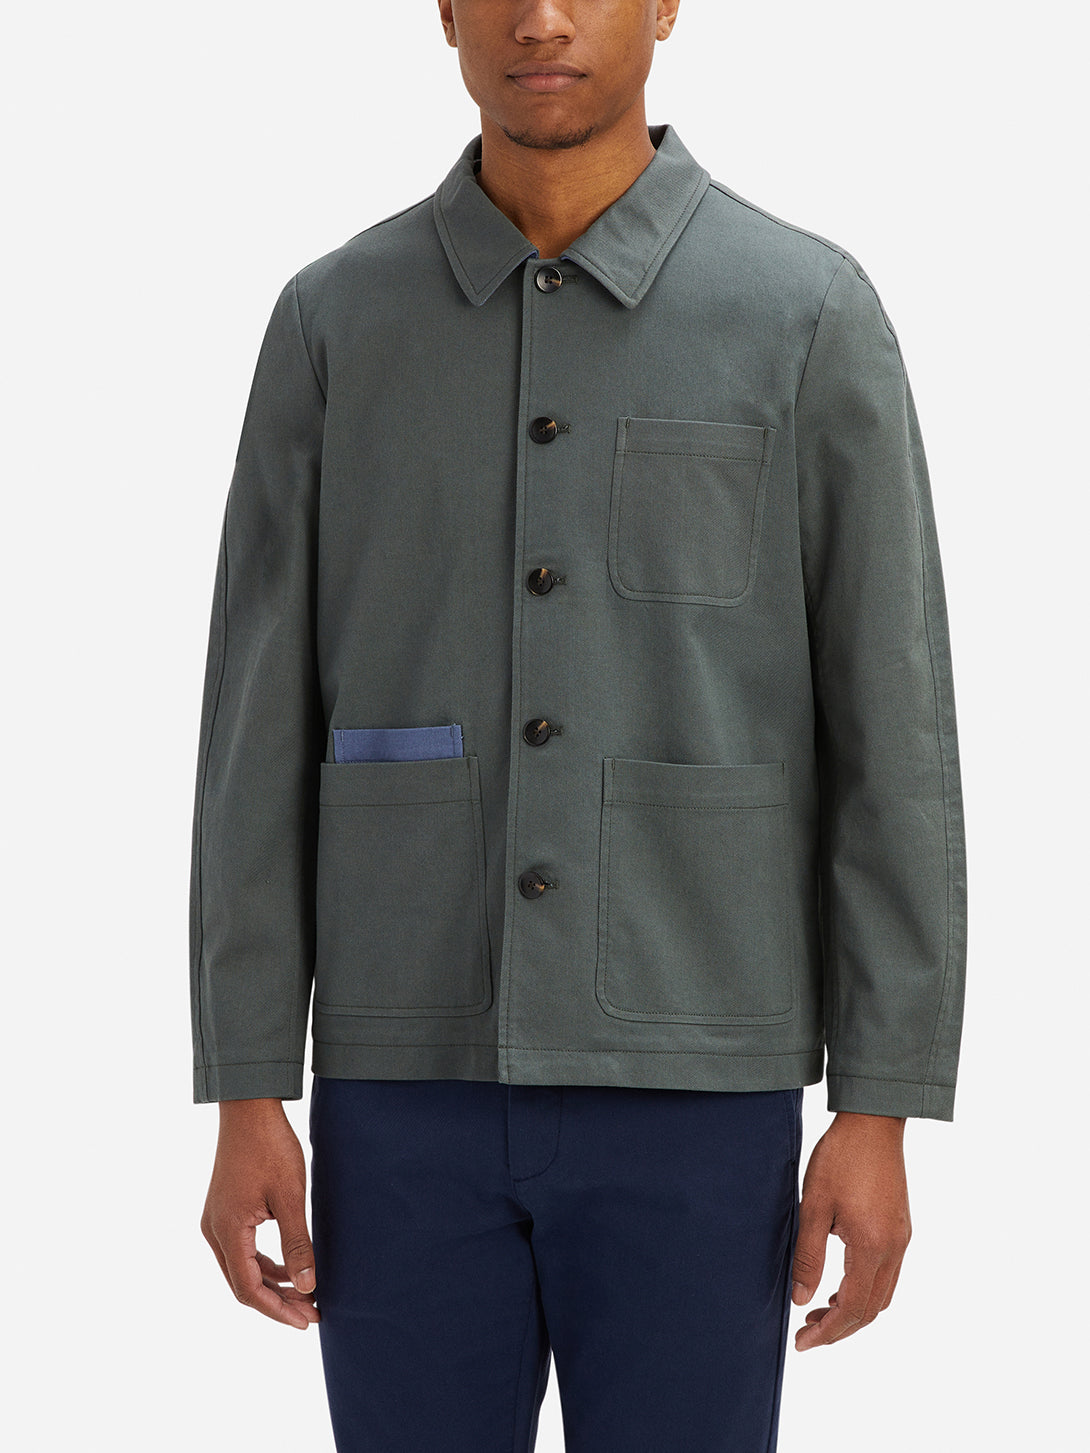 Urban Chic Men's Remi Chore Jacket 